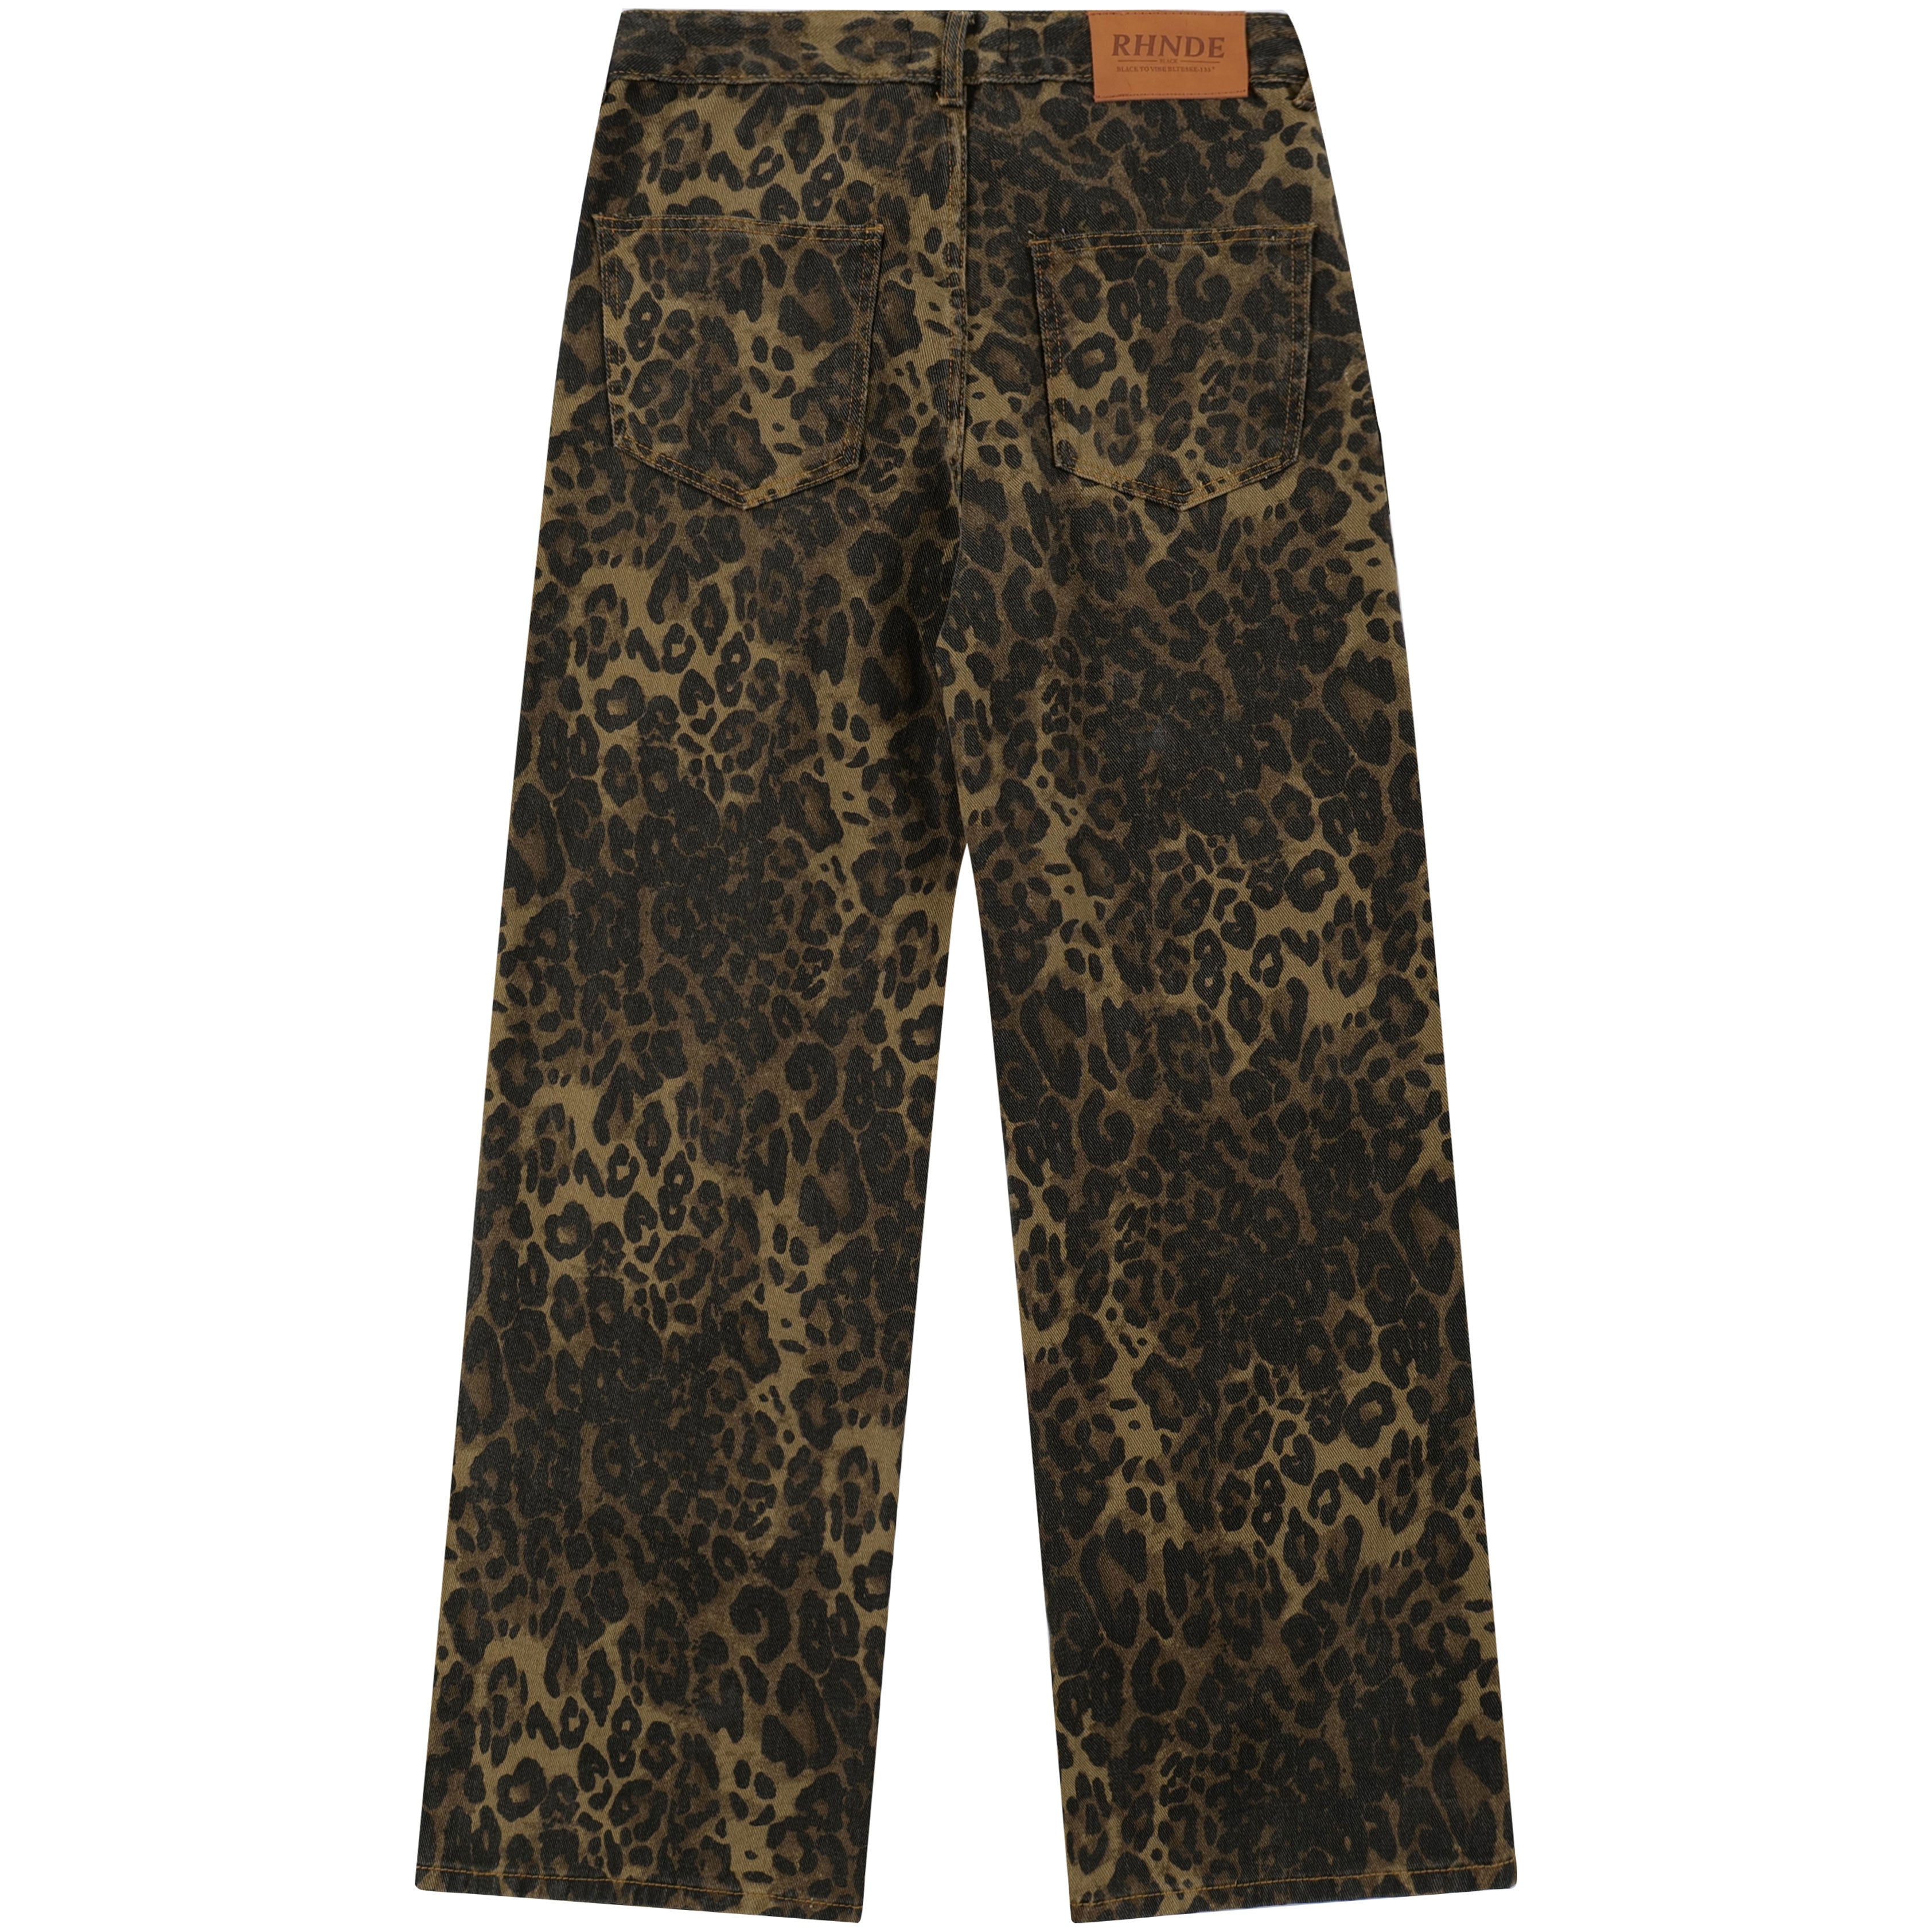 LEMANDIK® Leopard Straight Leg Jeans Multiple Pockets